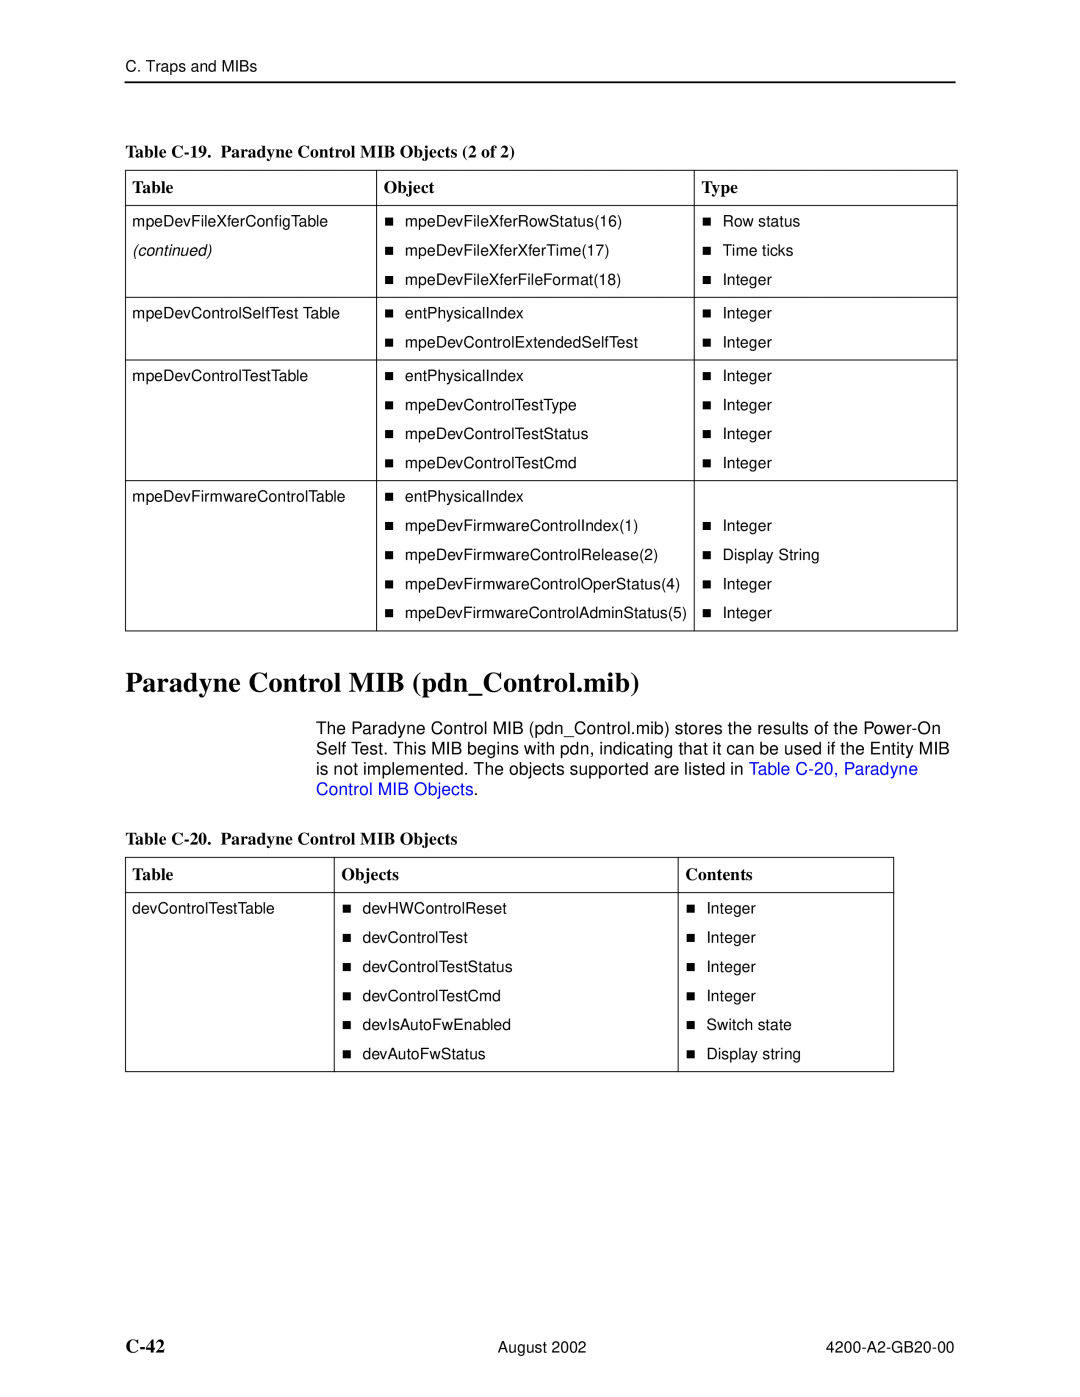 Paradyne 4200 Paradyne Control MIB pdnControl.mib, C-42, Table C-19. Paradyne Control MIB Objects 2 of, Type, Contents 